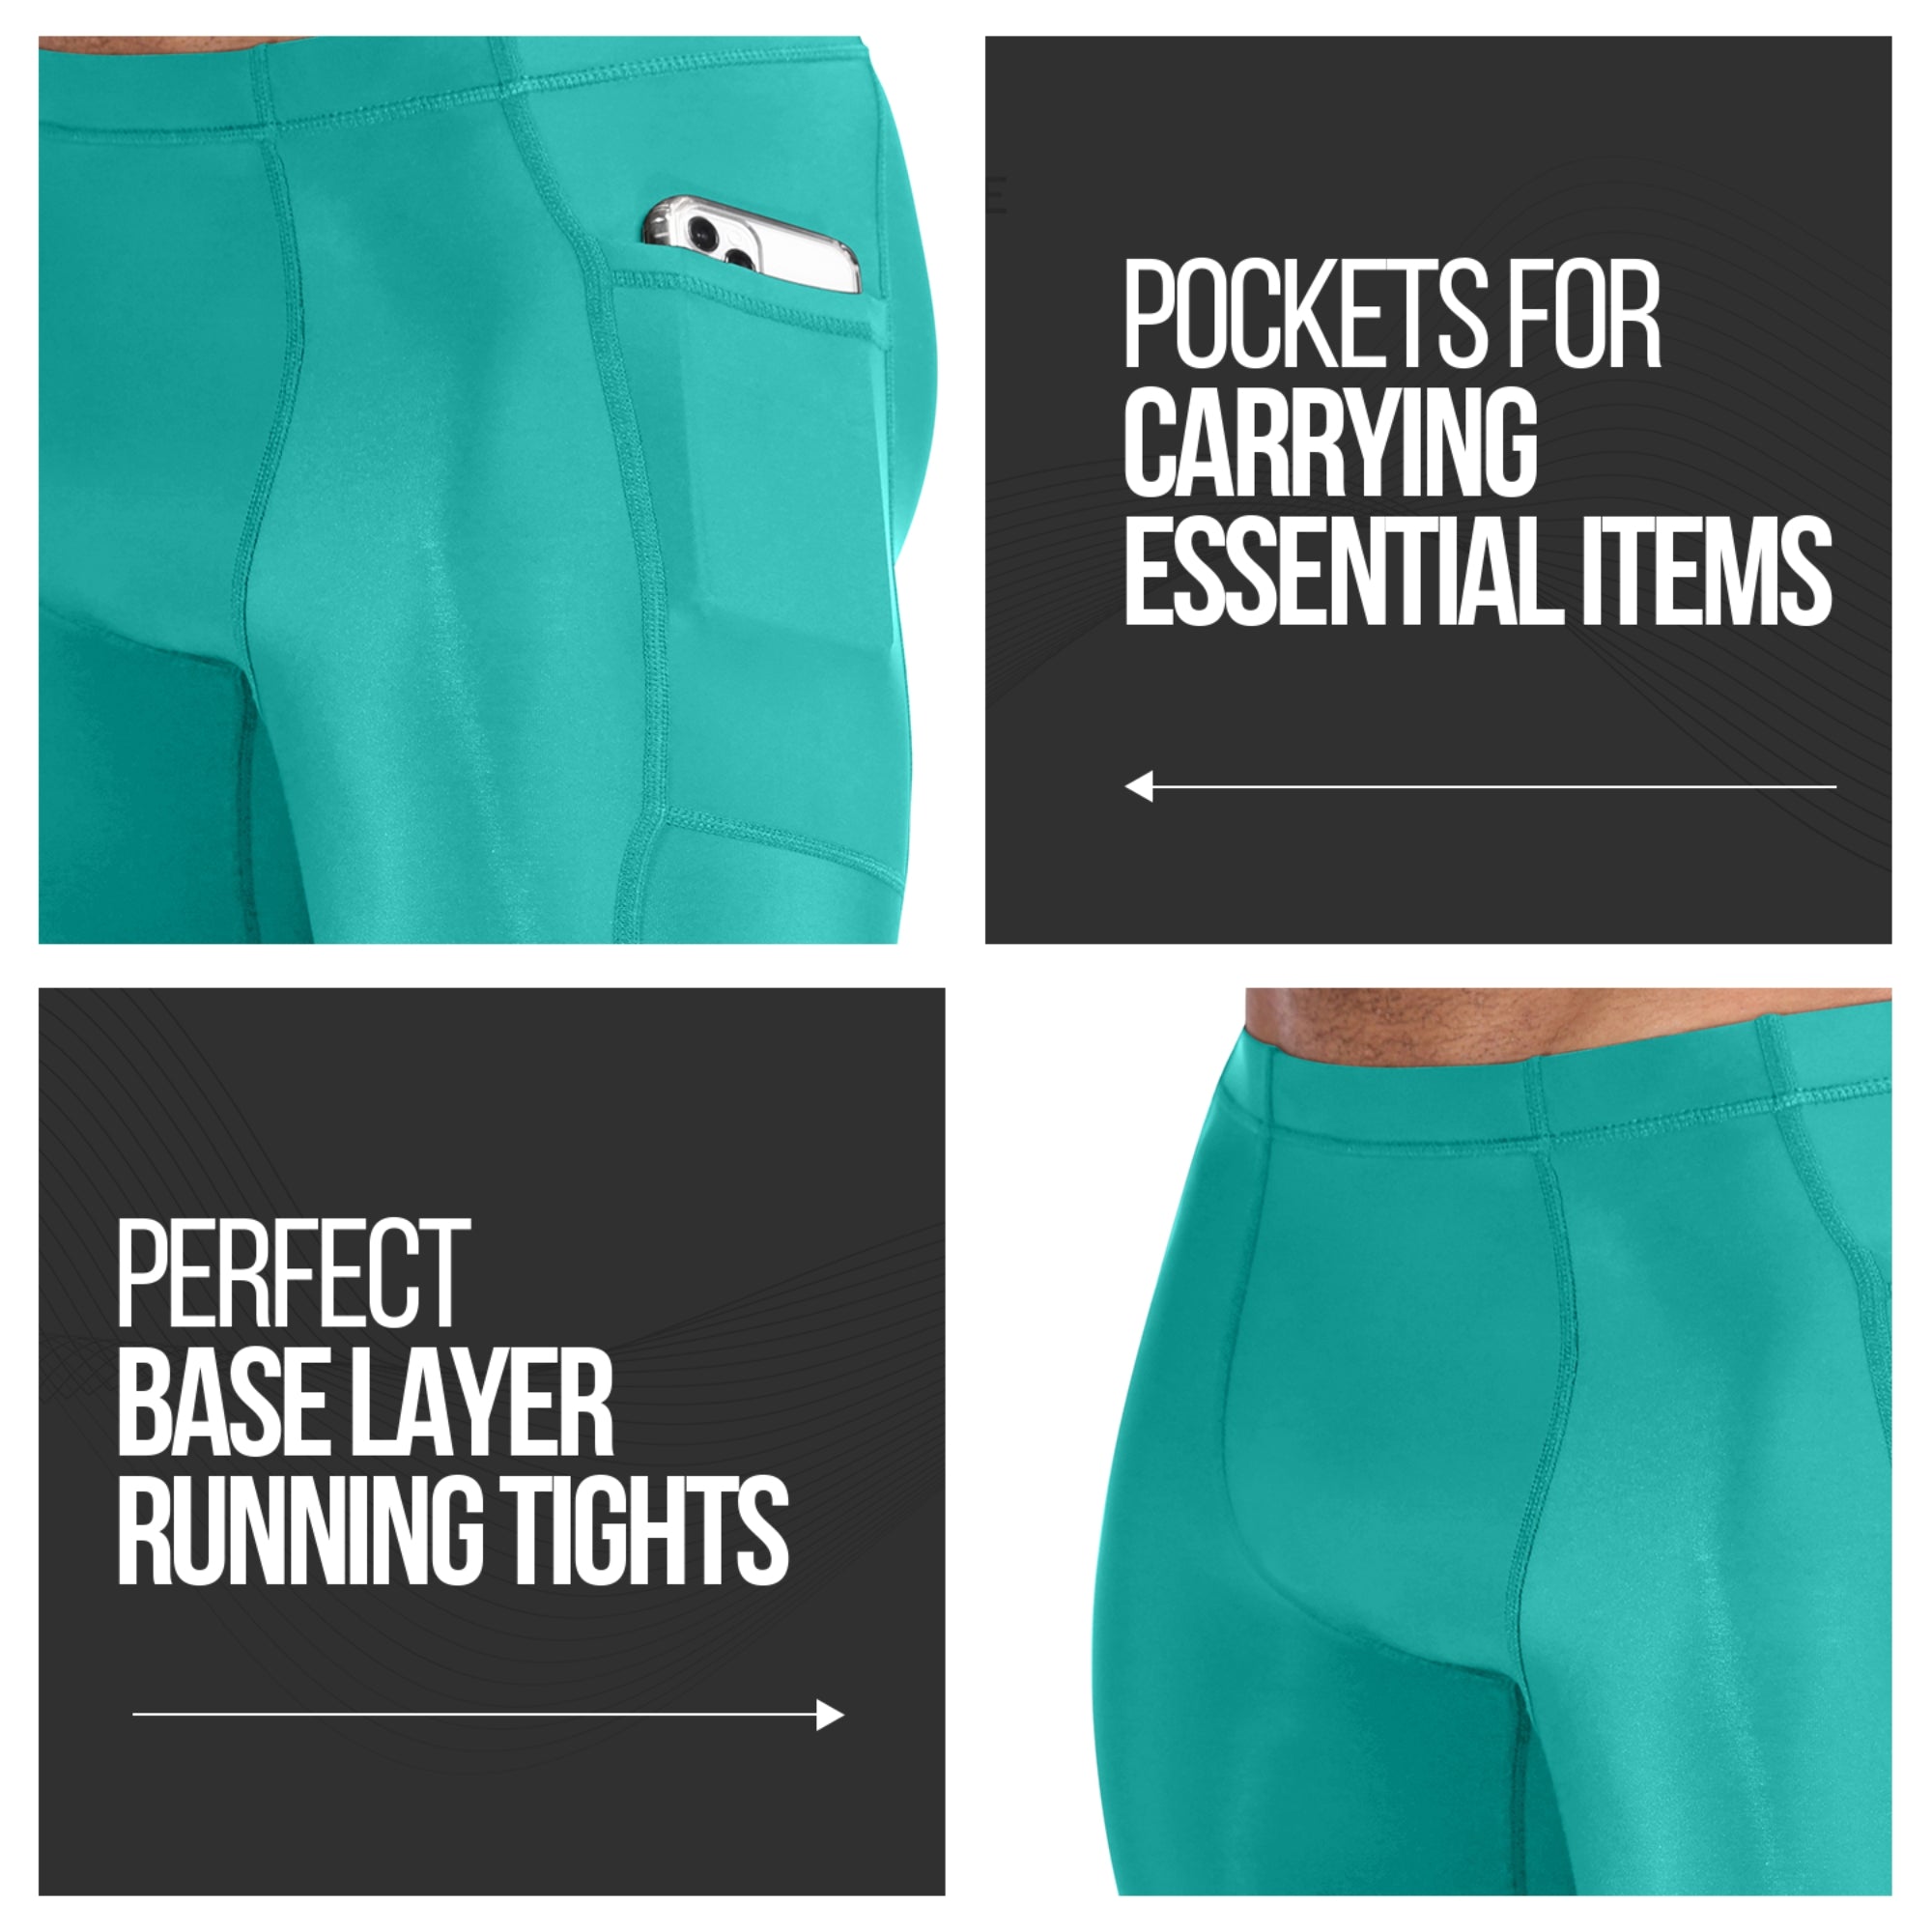 Men's Compression Pants W/ Pockets - Green